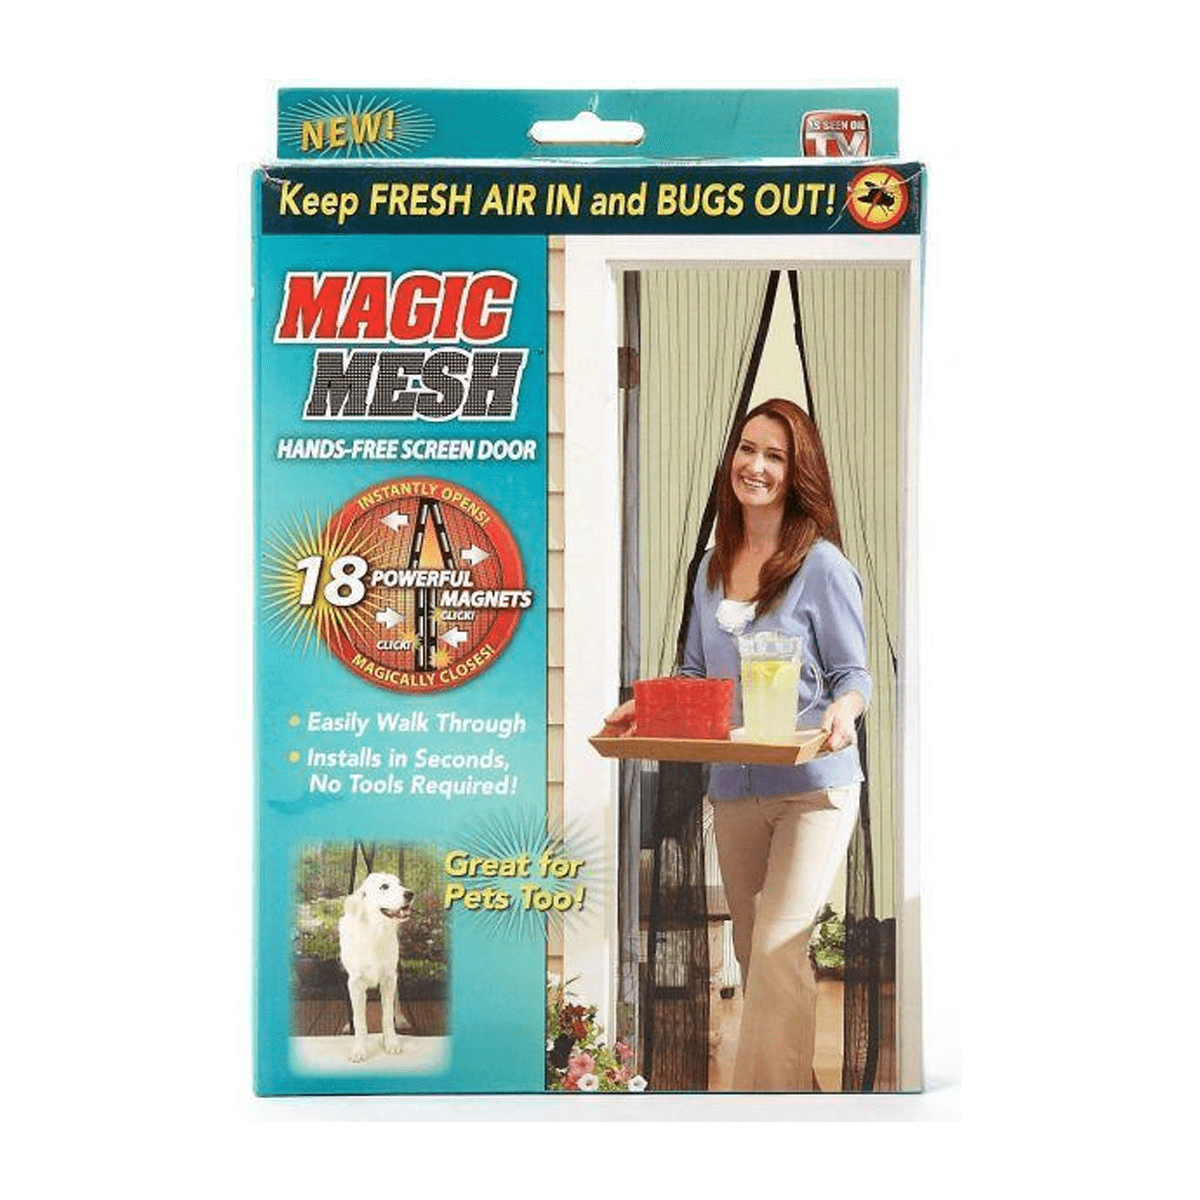 Magic Mesh Hands-Free Screen Net Magnetic Anti Mosquito Bug Home Door Curtain